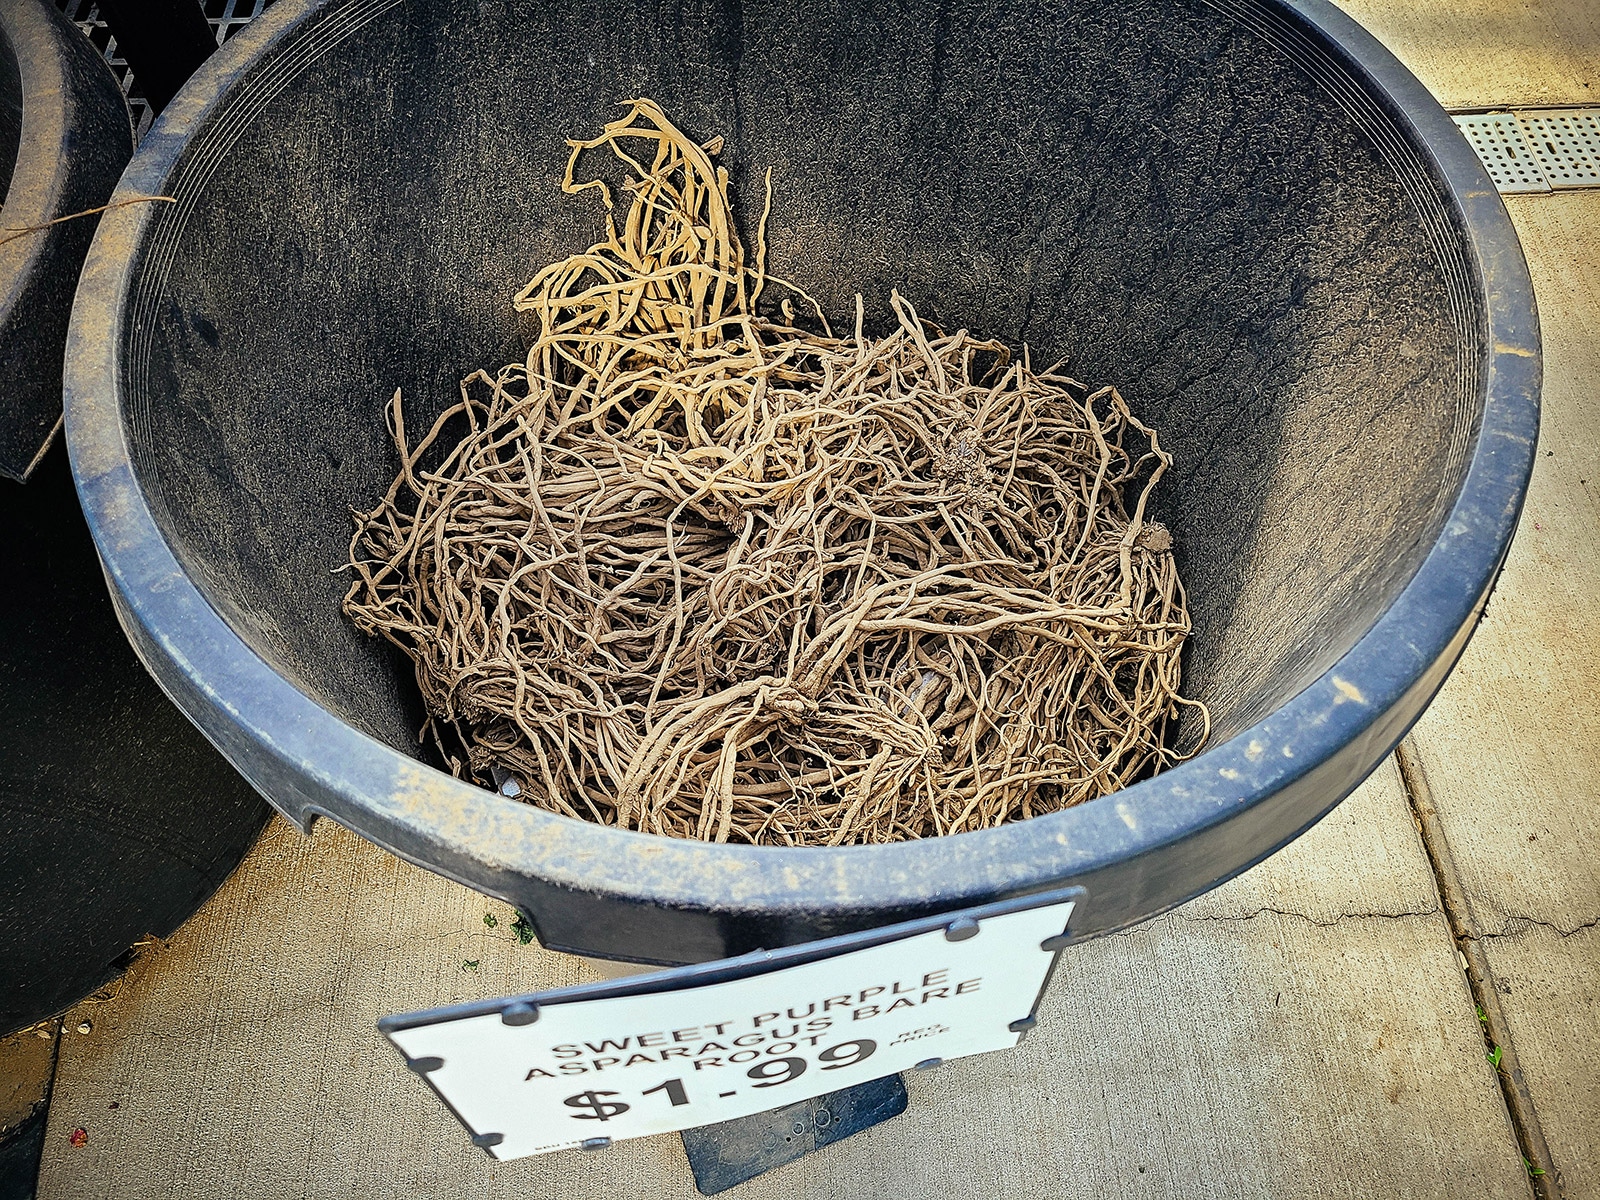 Asparagus crowns piled in a black tub at a garden center